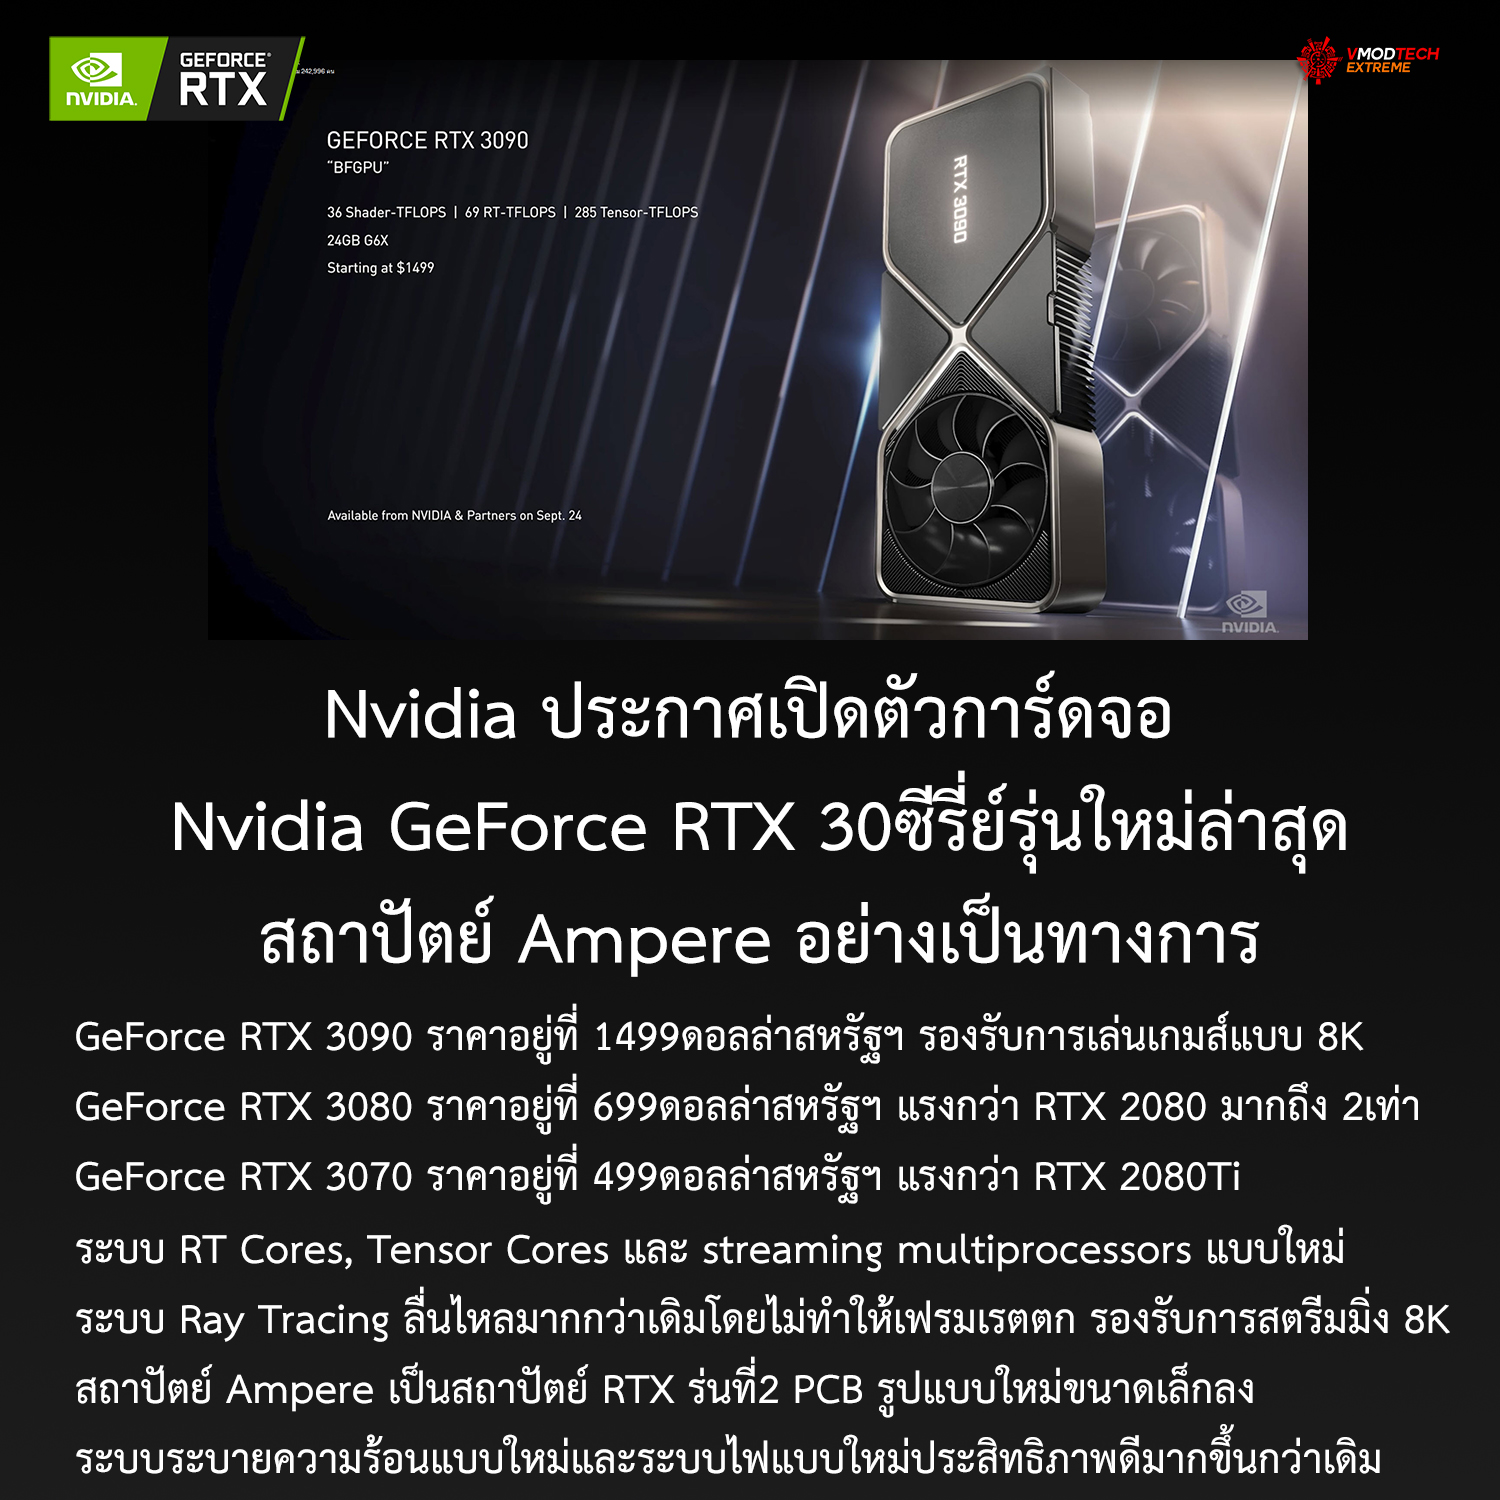 nvidia geforce rtx 3090 rtx 3080 rtx 3070 Nvidia ประกาศเปิดตัวการ์ดจอ Nvidia GeForce RTX 30ซีรี่ย์รุ่นใหม่ล่าสุดสถาปัตย์ Ampere อย่างเป็นทางการ 